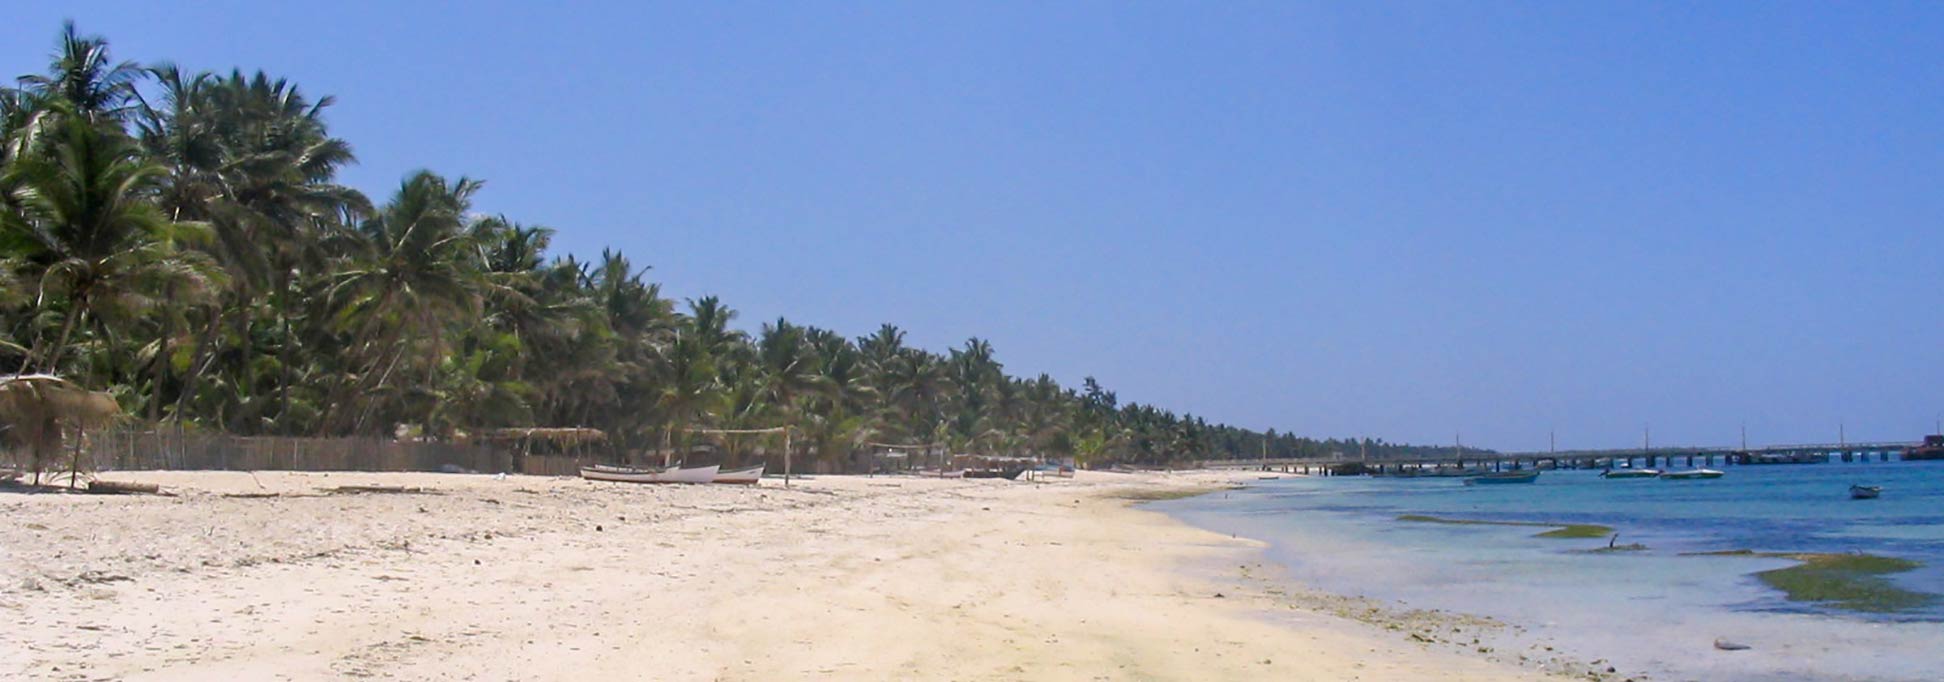 Lakshadweep beach near Kavaratti, administrative capital city of Lakshadweep